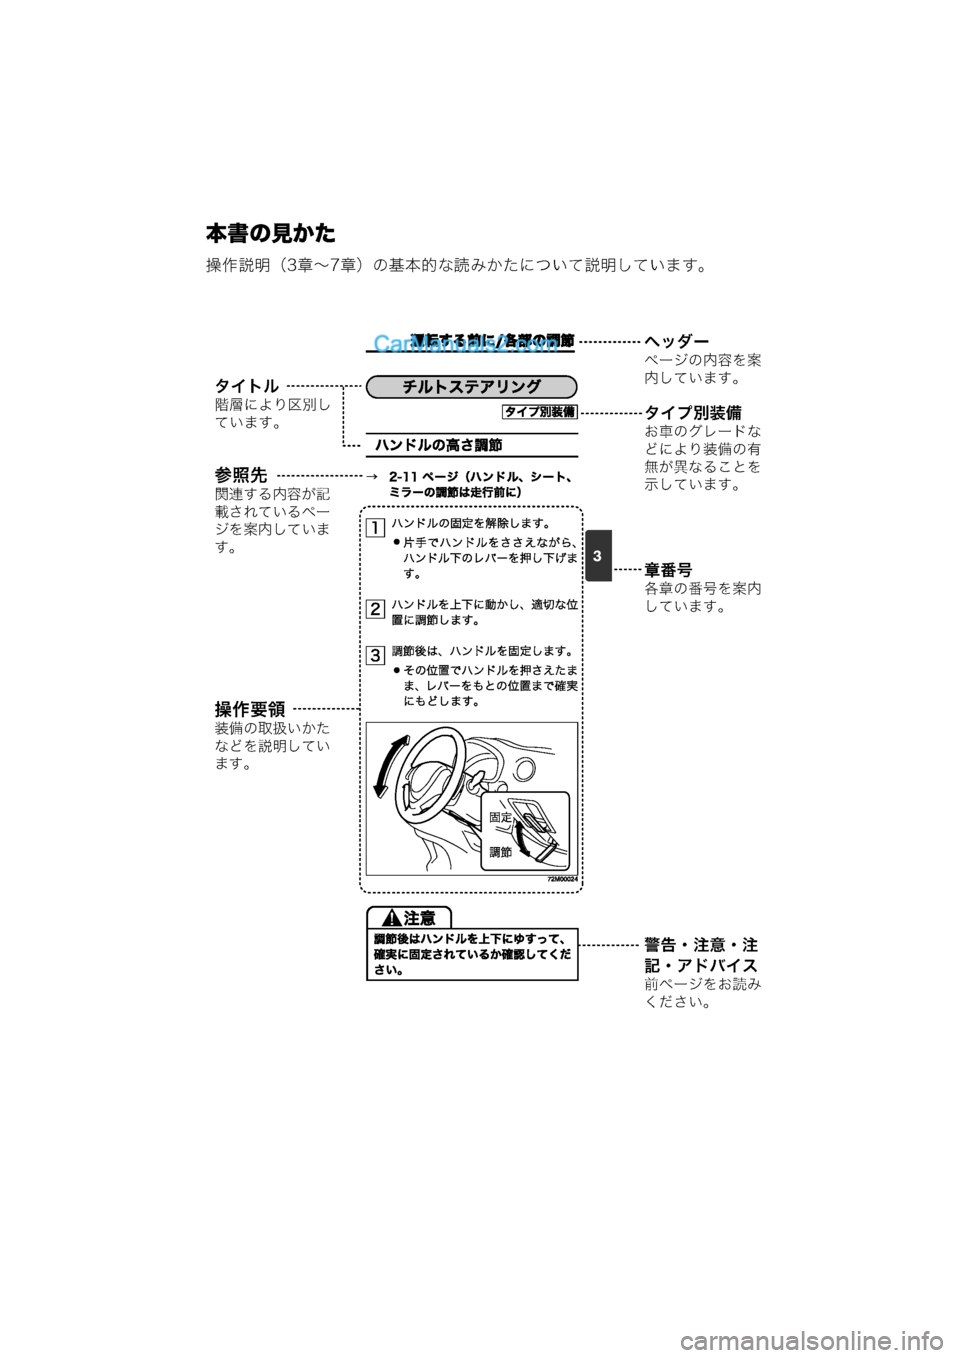 MAZDA MODEL CARROL 2013  取扱説明書 (キャロル) (in Japanese) 本書の見かた
操作説明（3章～7章）の基本的な読みかたについて説明しています。
3
‰n’µ
¡>[]
9Q,ÿ
Nƒ0
\õ,^NÁ$

‚e˜N*9